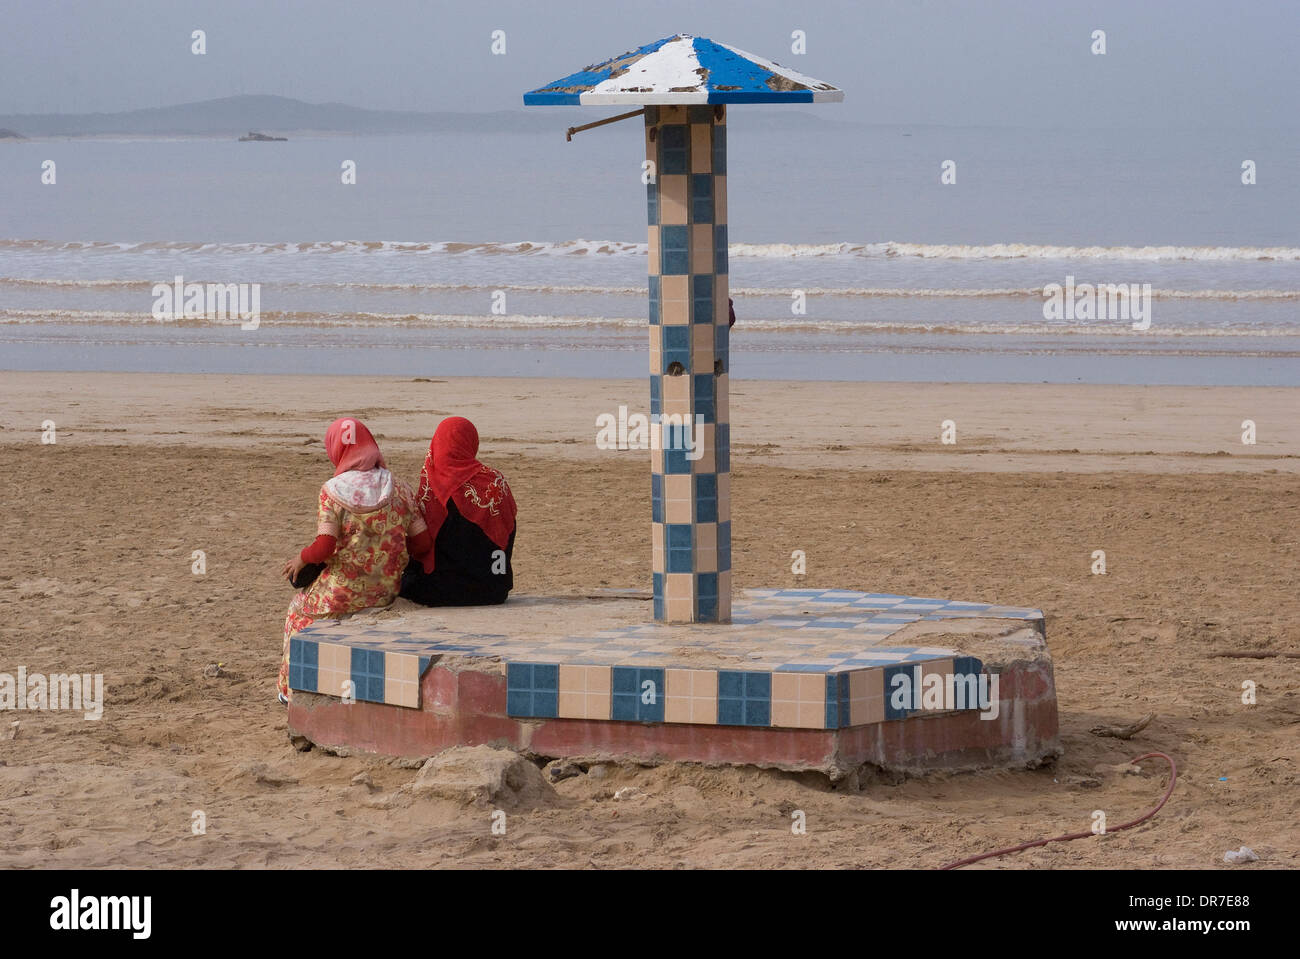 Traditionally dressed women enjoying watching the waves on the beach, Essaouira, Morocco Stock Photo